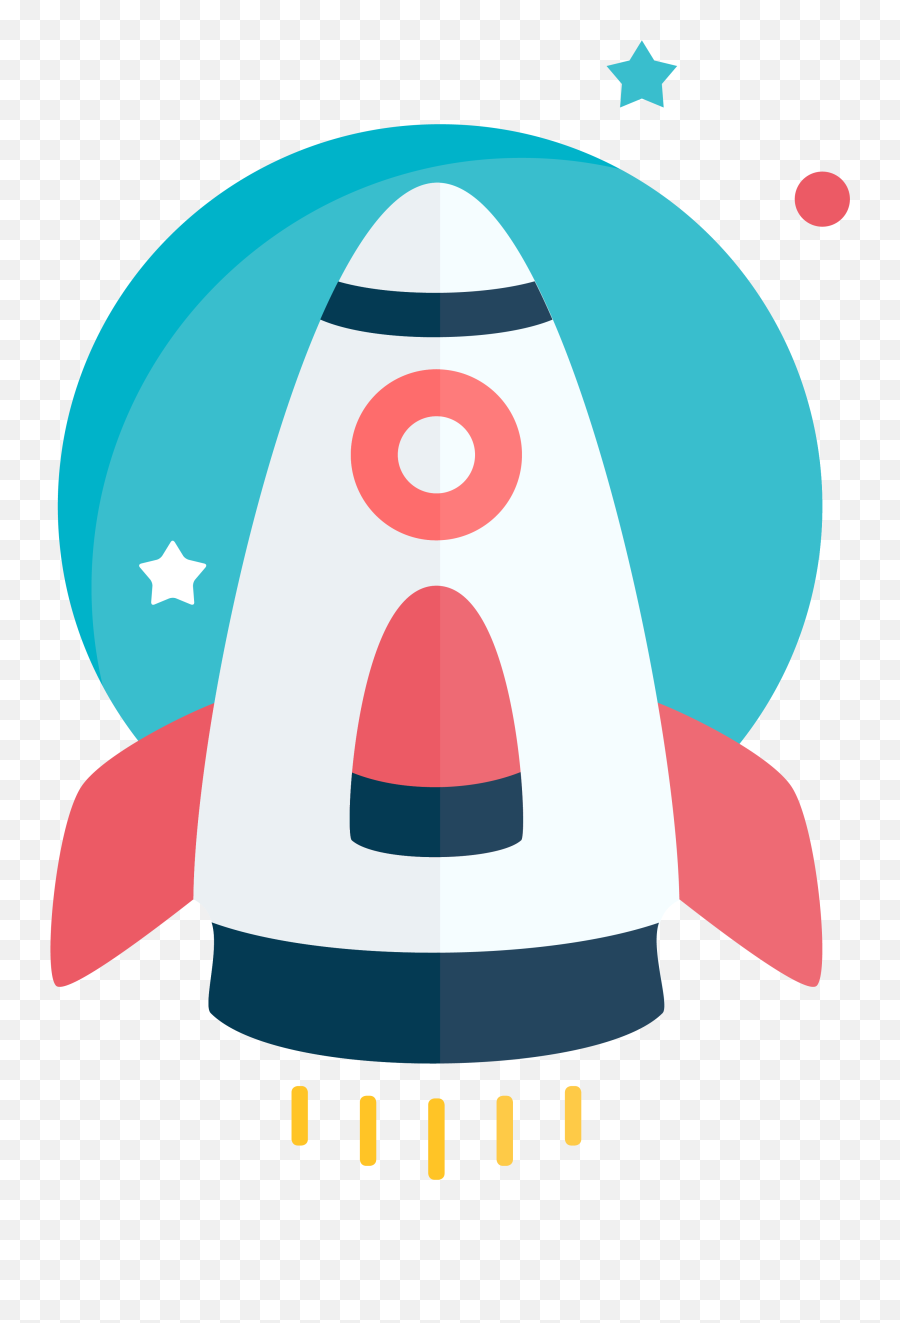 Download 3512 X 4030 6 - Spacecraft Full Size Png Image Emoji,Spacecraft Png